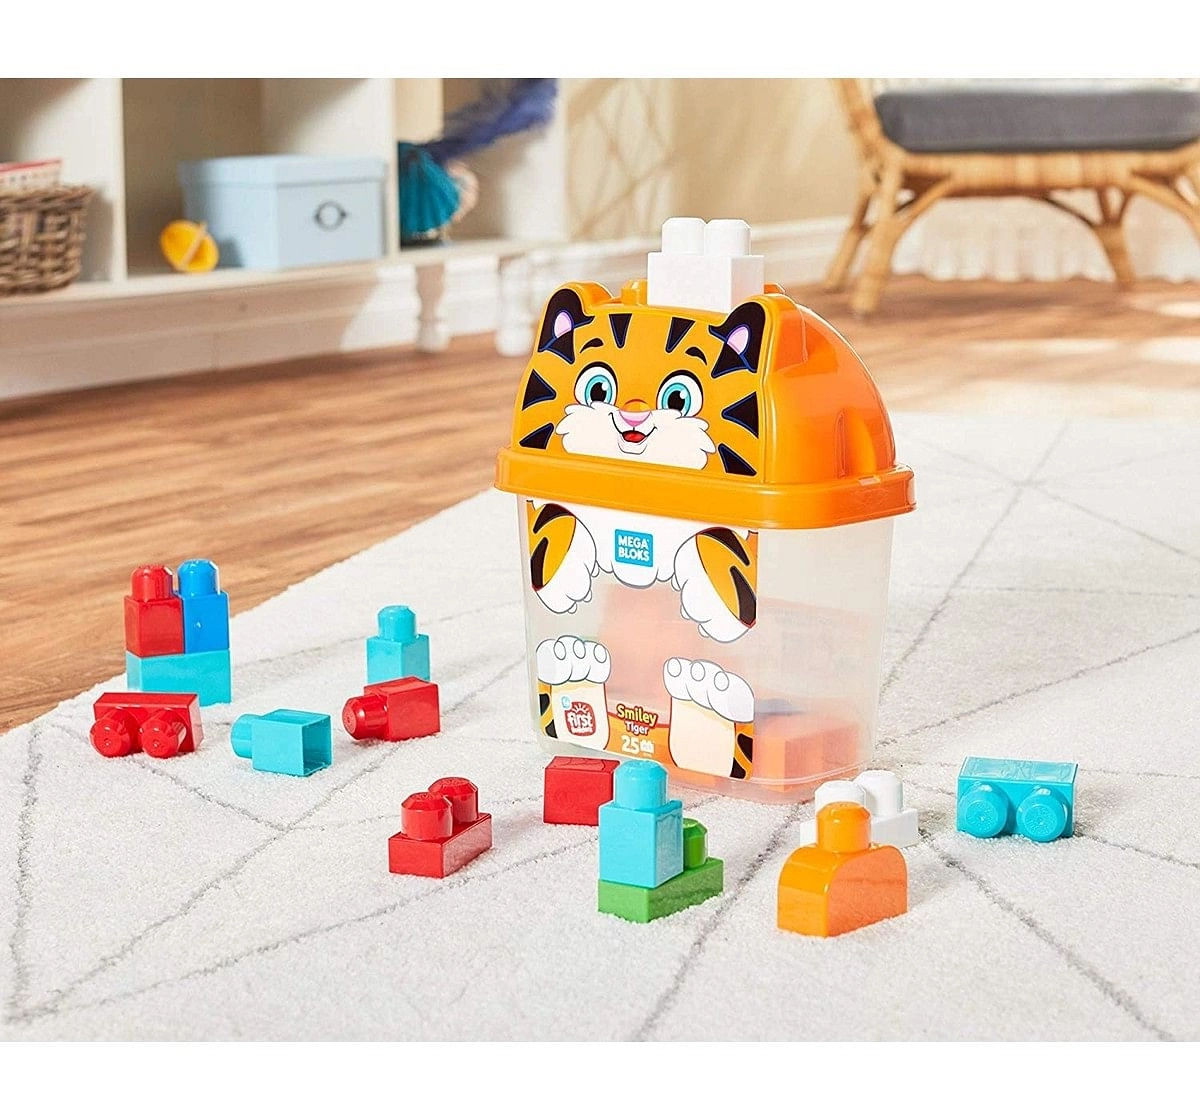 Mega Blocks Animal Buckets Tiger Toddler Blocks for Kids age 12M+ 